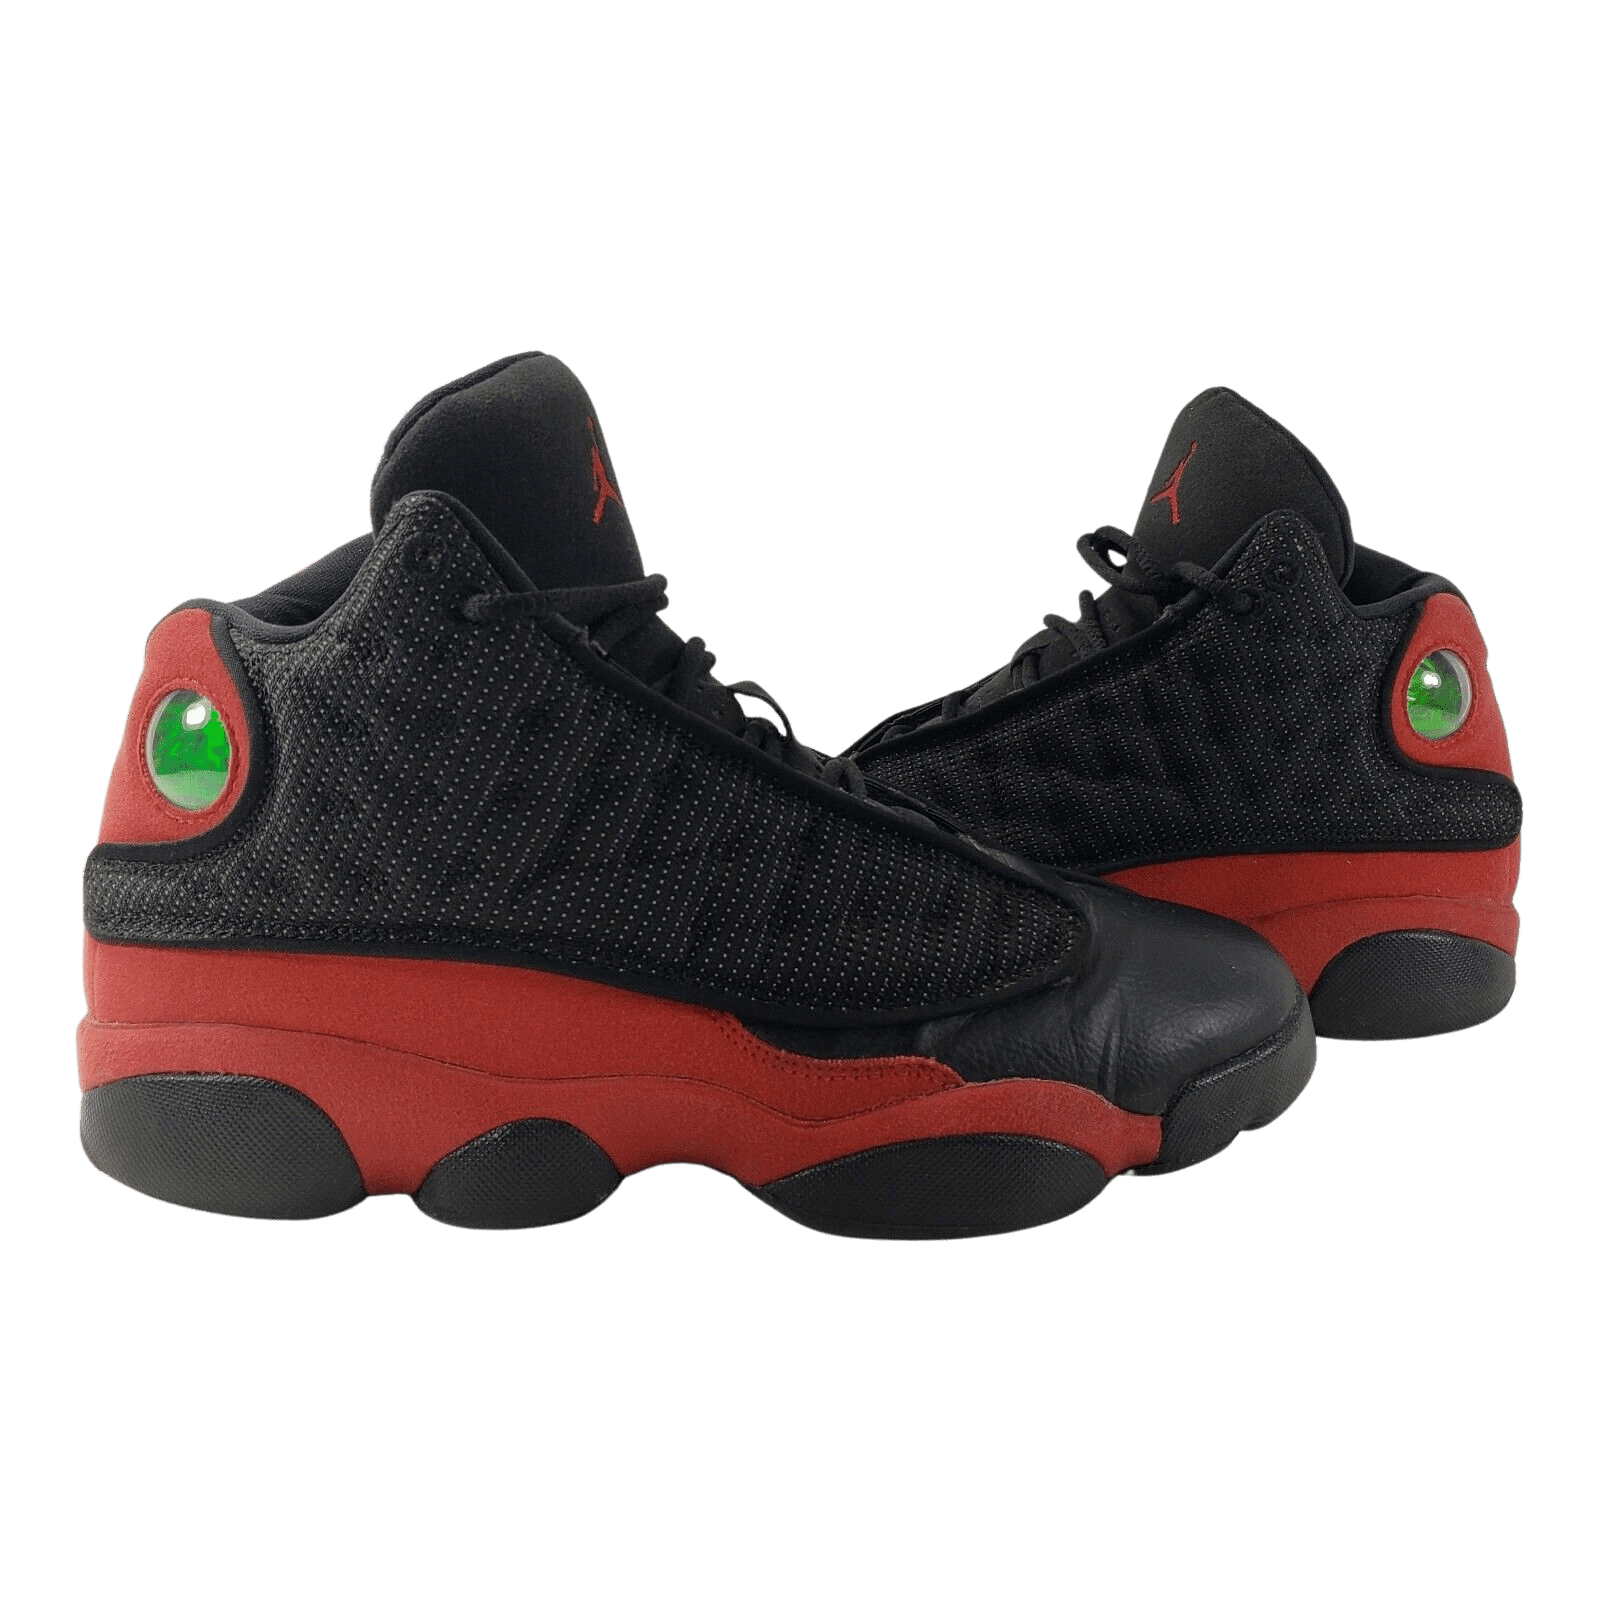 Jordan 13 Bred Sneakers Offer Retro Style | eBay